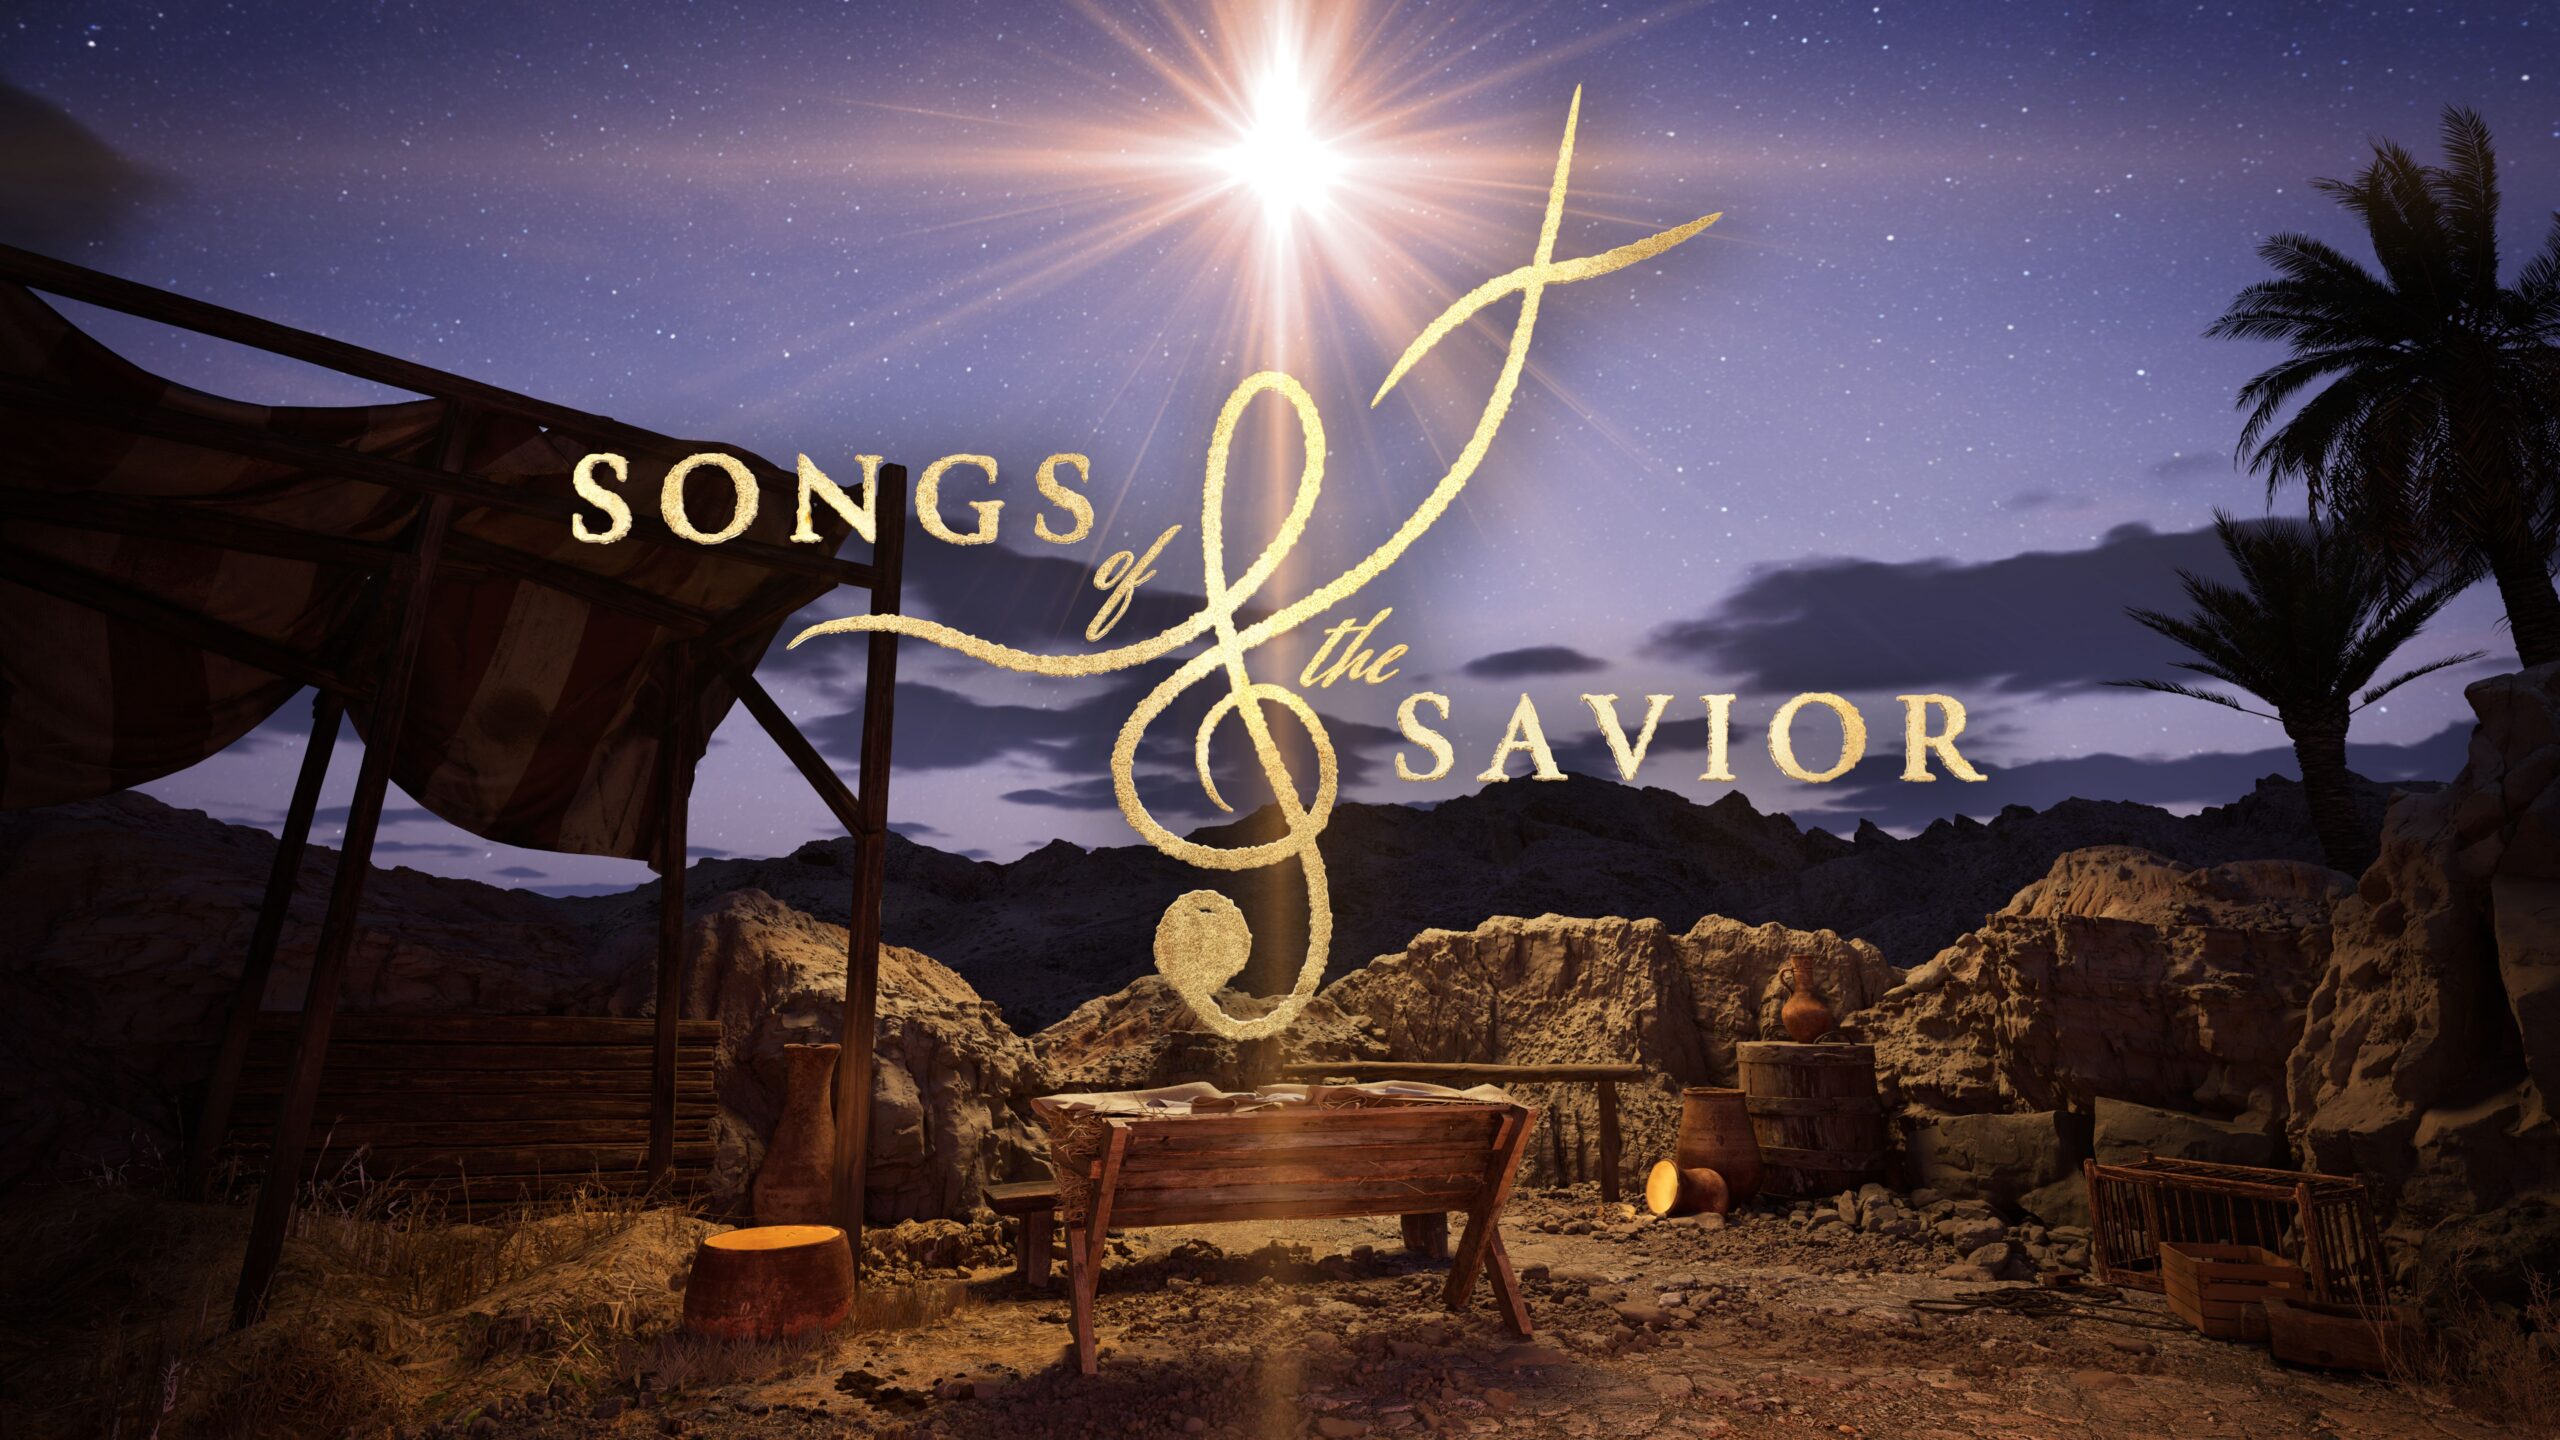 Songs of the Savior: “Silent Night”